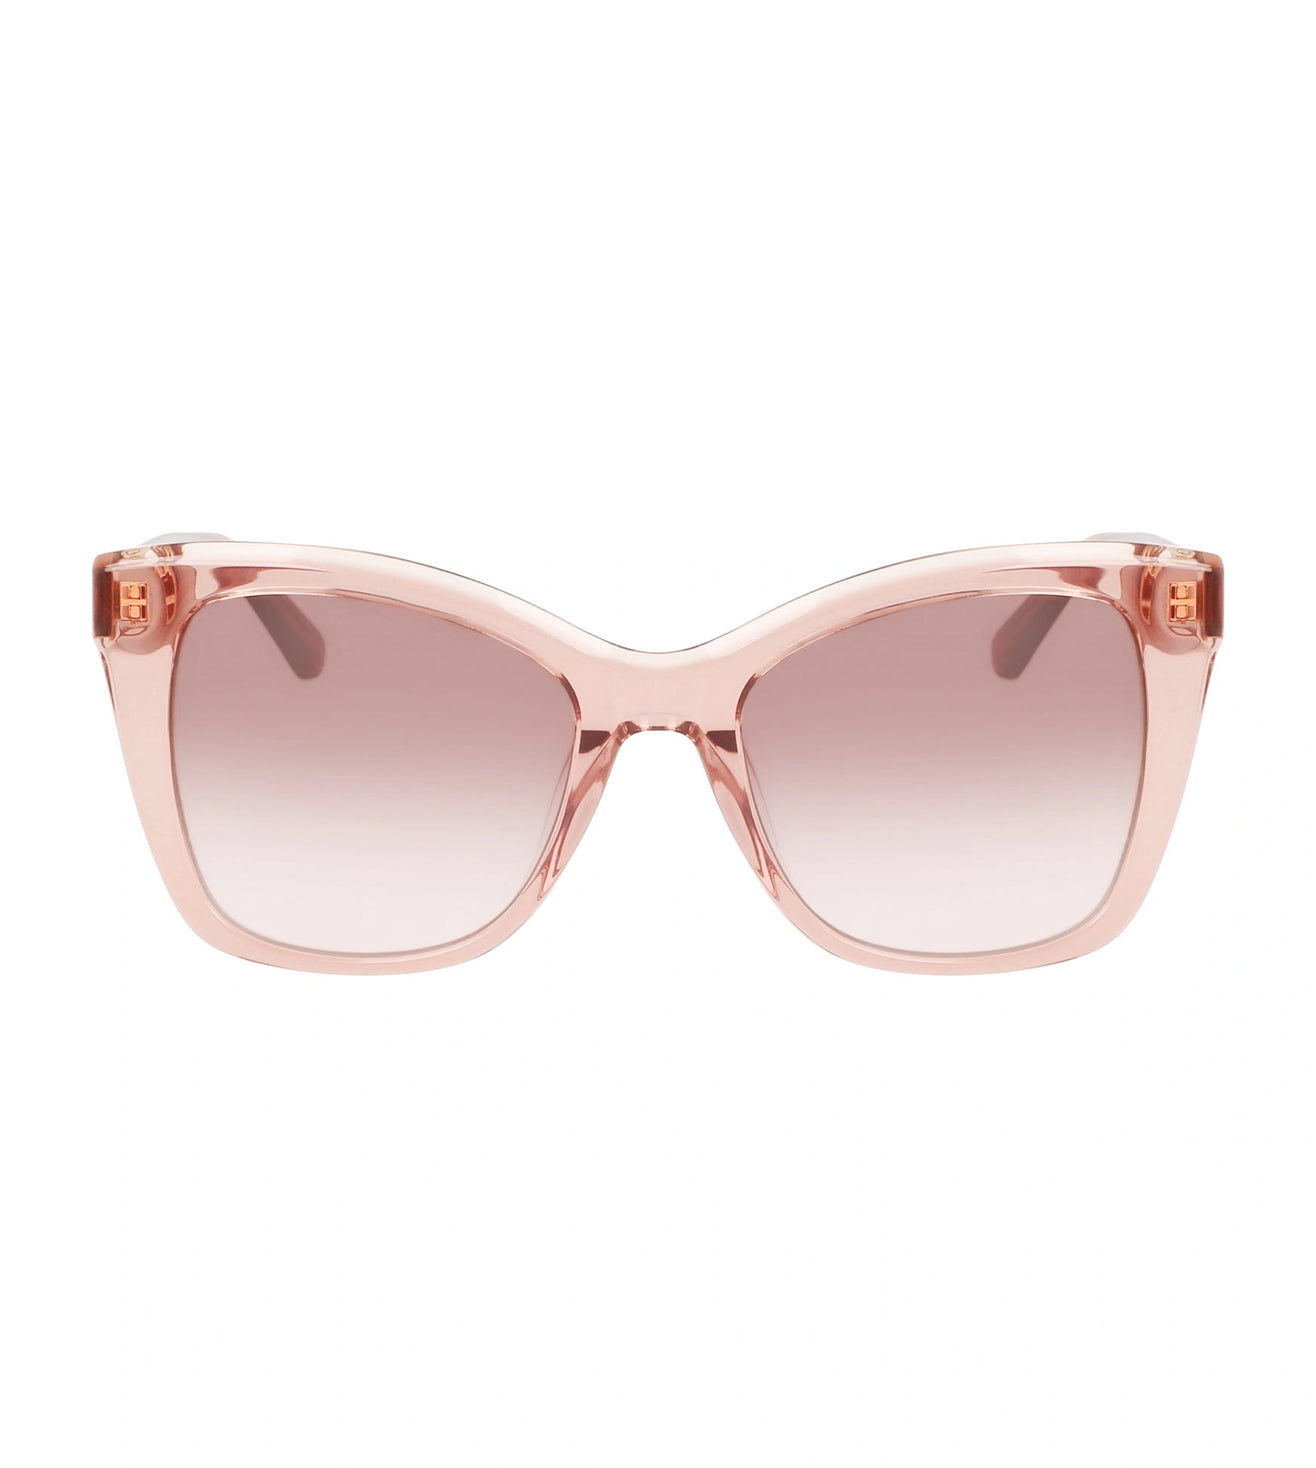 Calvin Klein Women's Gradient Brown/Rose Butterfly Sunglasses